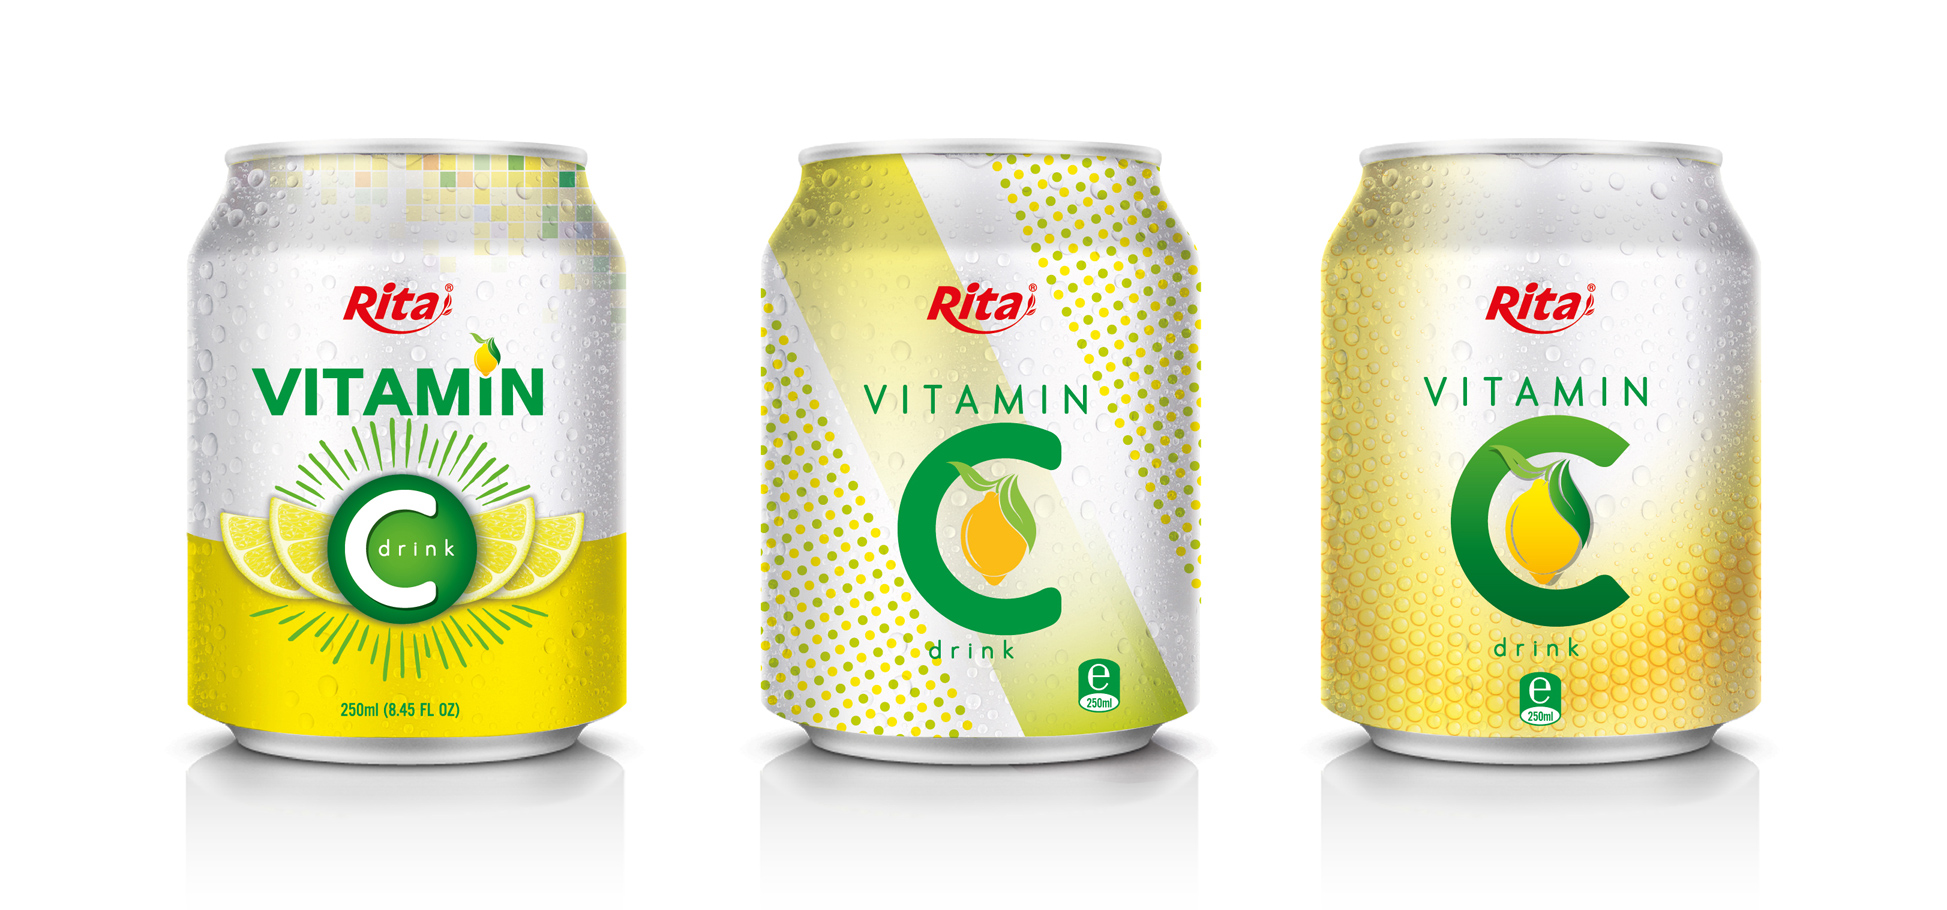 vitamin C drink 250ml can of RITA India